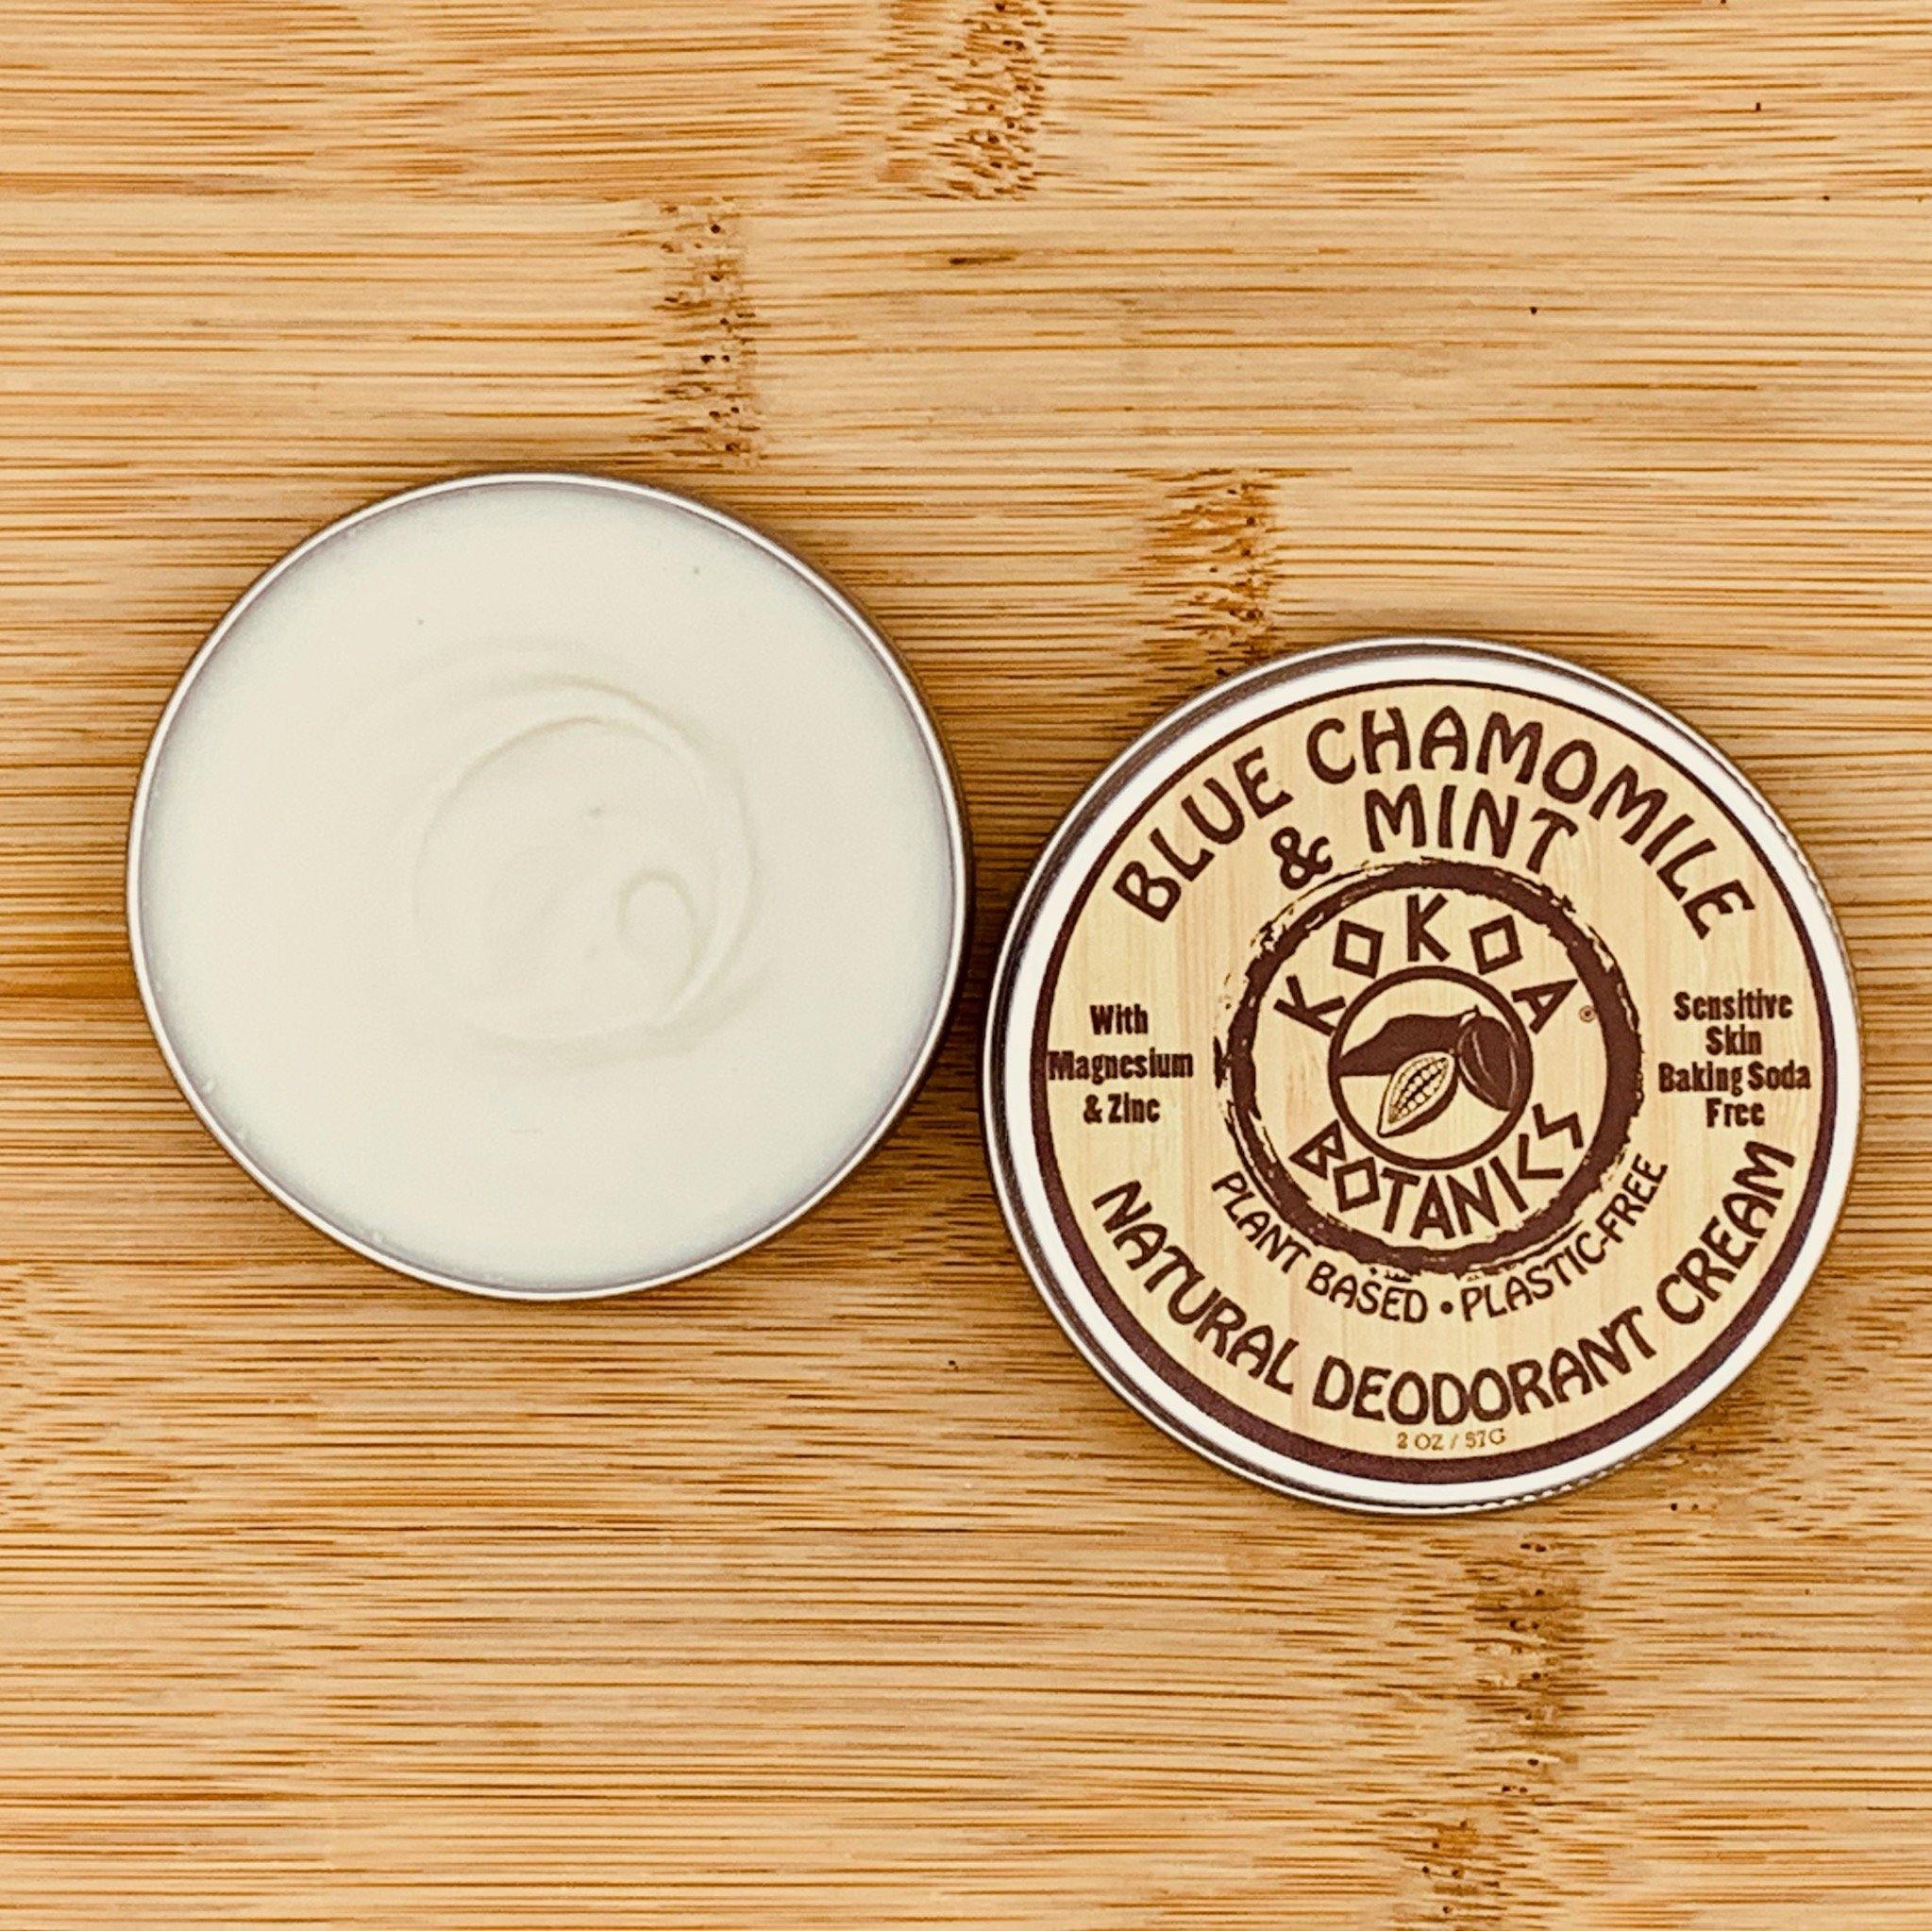 BLUE CHAMOMILE & MINT- Natural Deodorant Cream - Sensitive Skin – Baking Soda -Free  2 oz - kokoabotanics